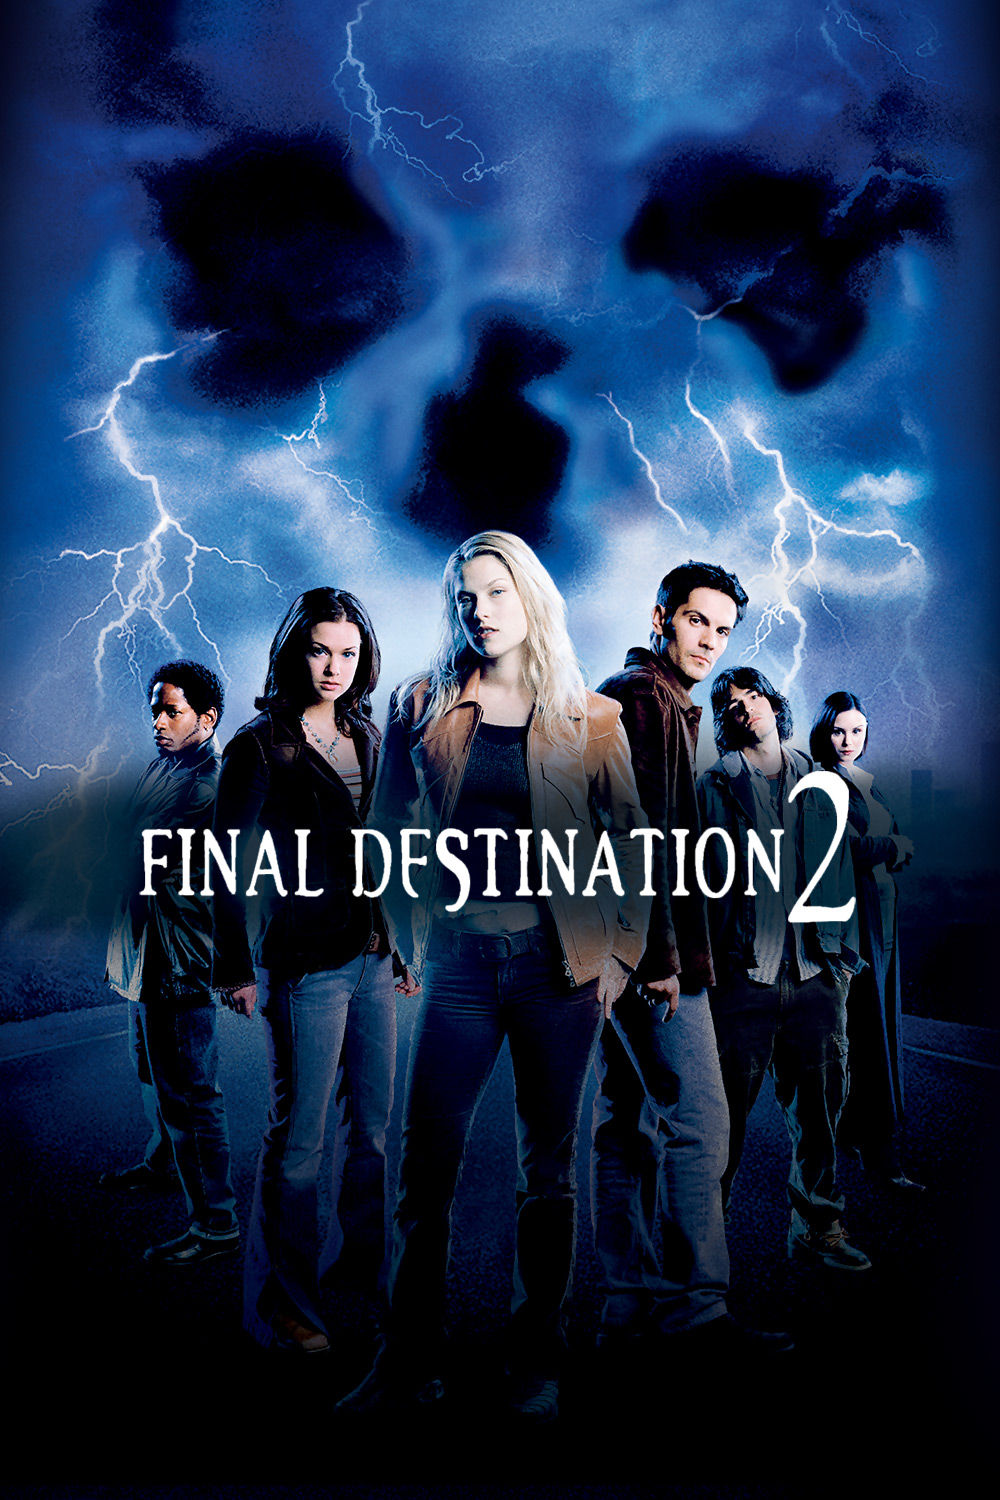 Watch Final Destination 2 Online